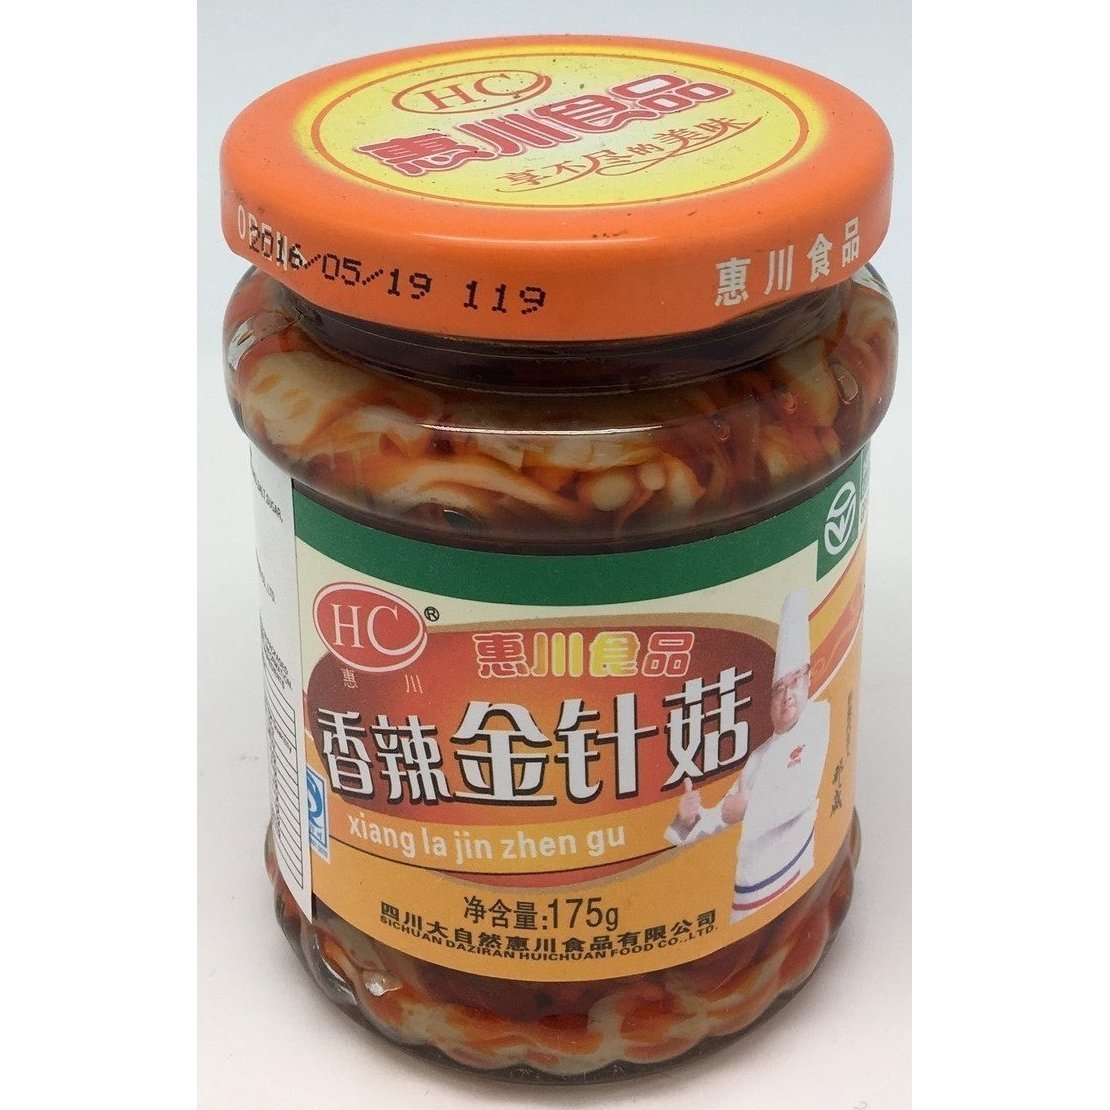 P001H Huichuan Brand - Pickled Hot Golden Mushroom 150g - 12 jar / 1 CTN - New Eastland Pty Ltd - Asian food wholesalers